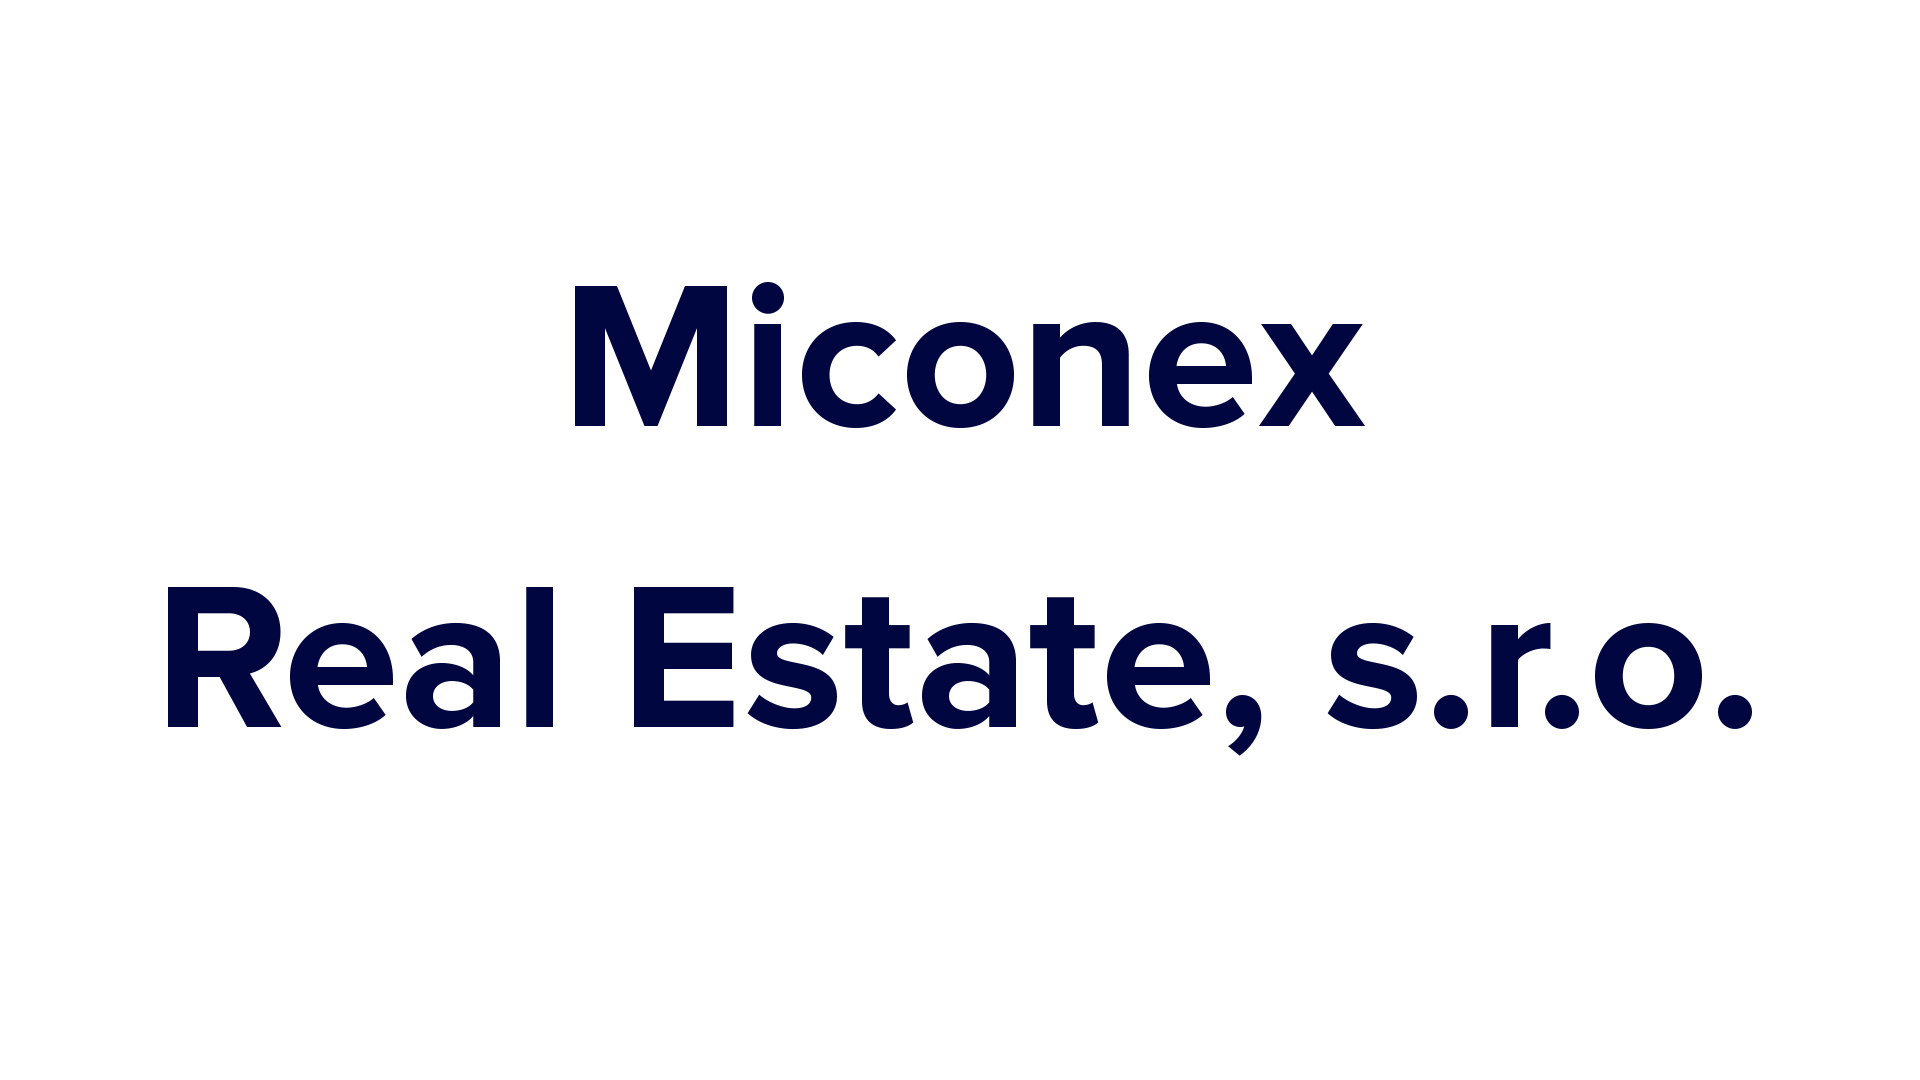 Miconex